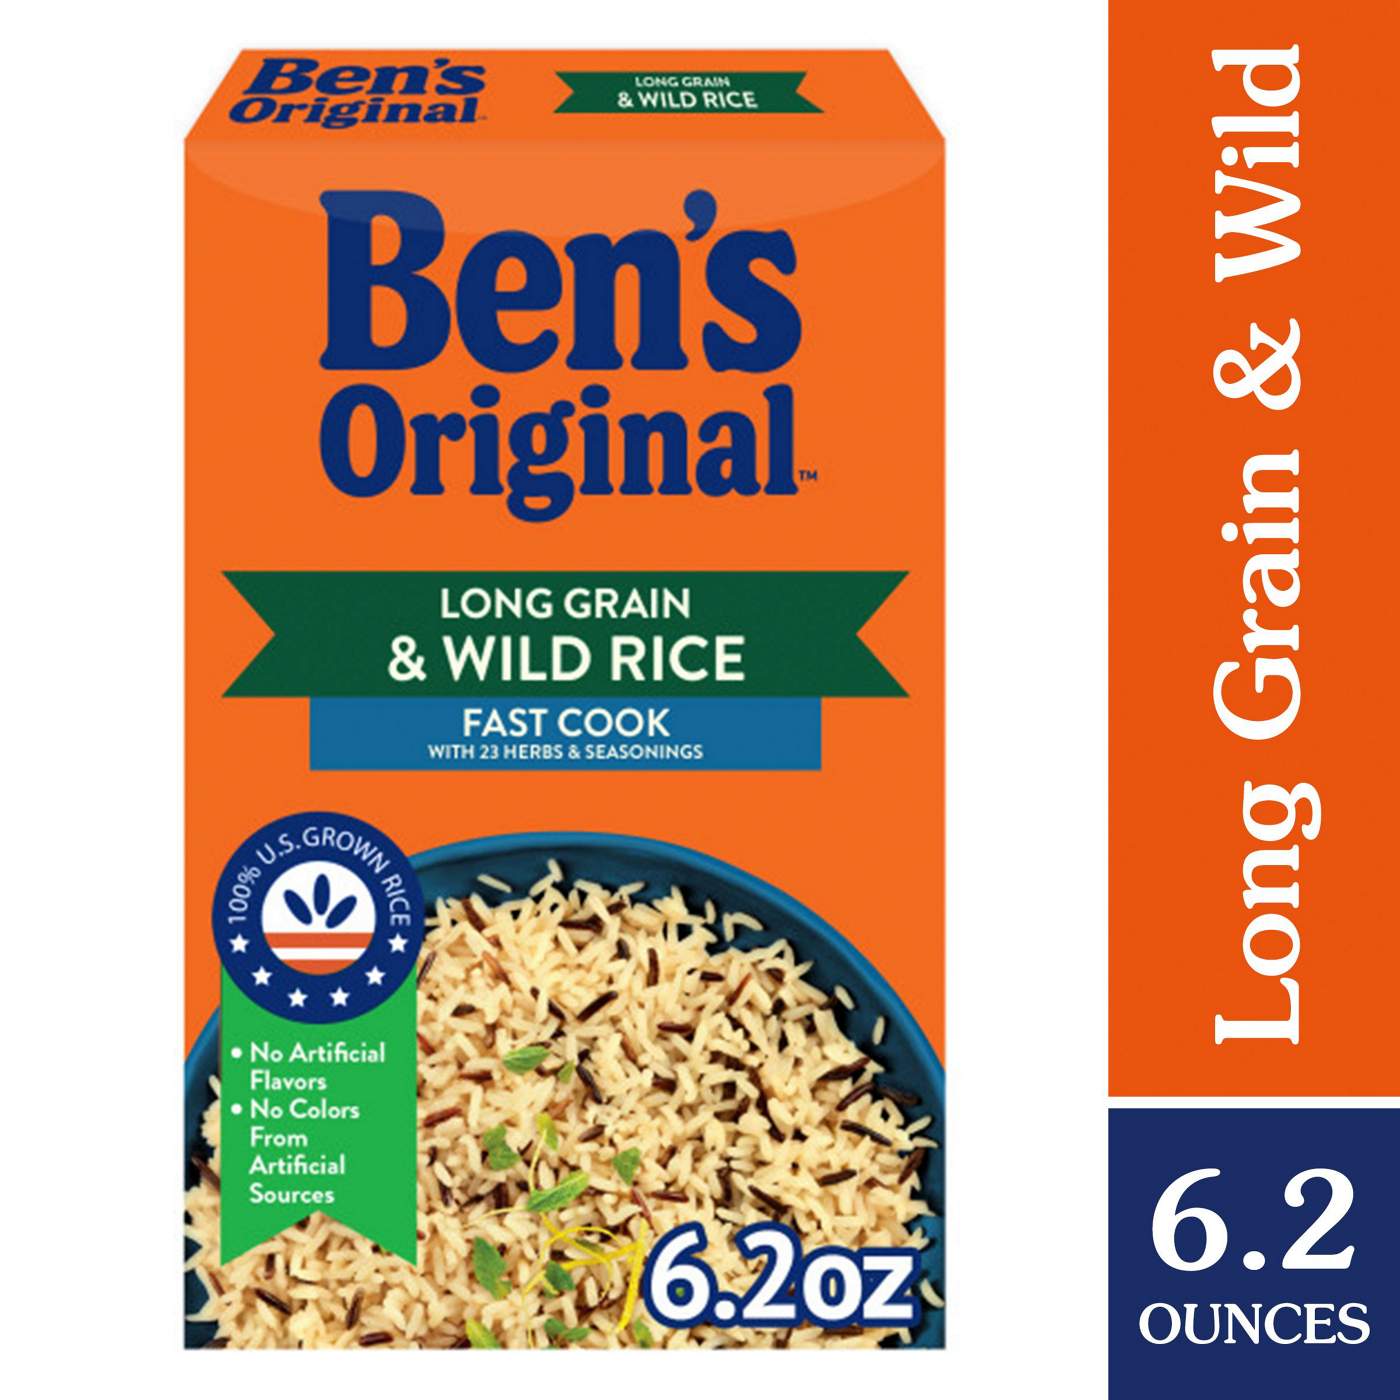 Ben's Original Fast Cook Long Grain and Wild Rice; image 3 of 6